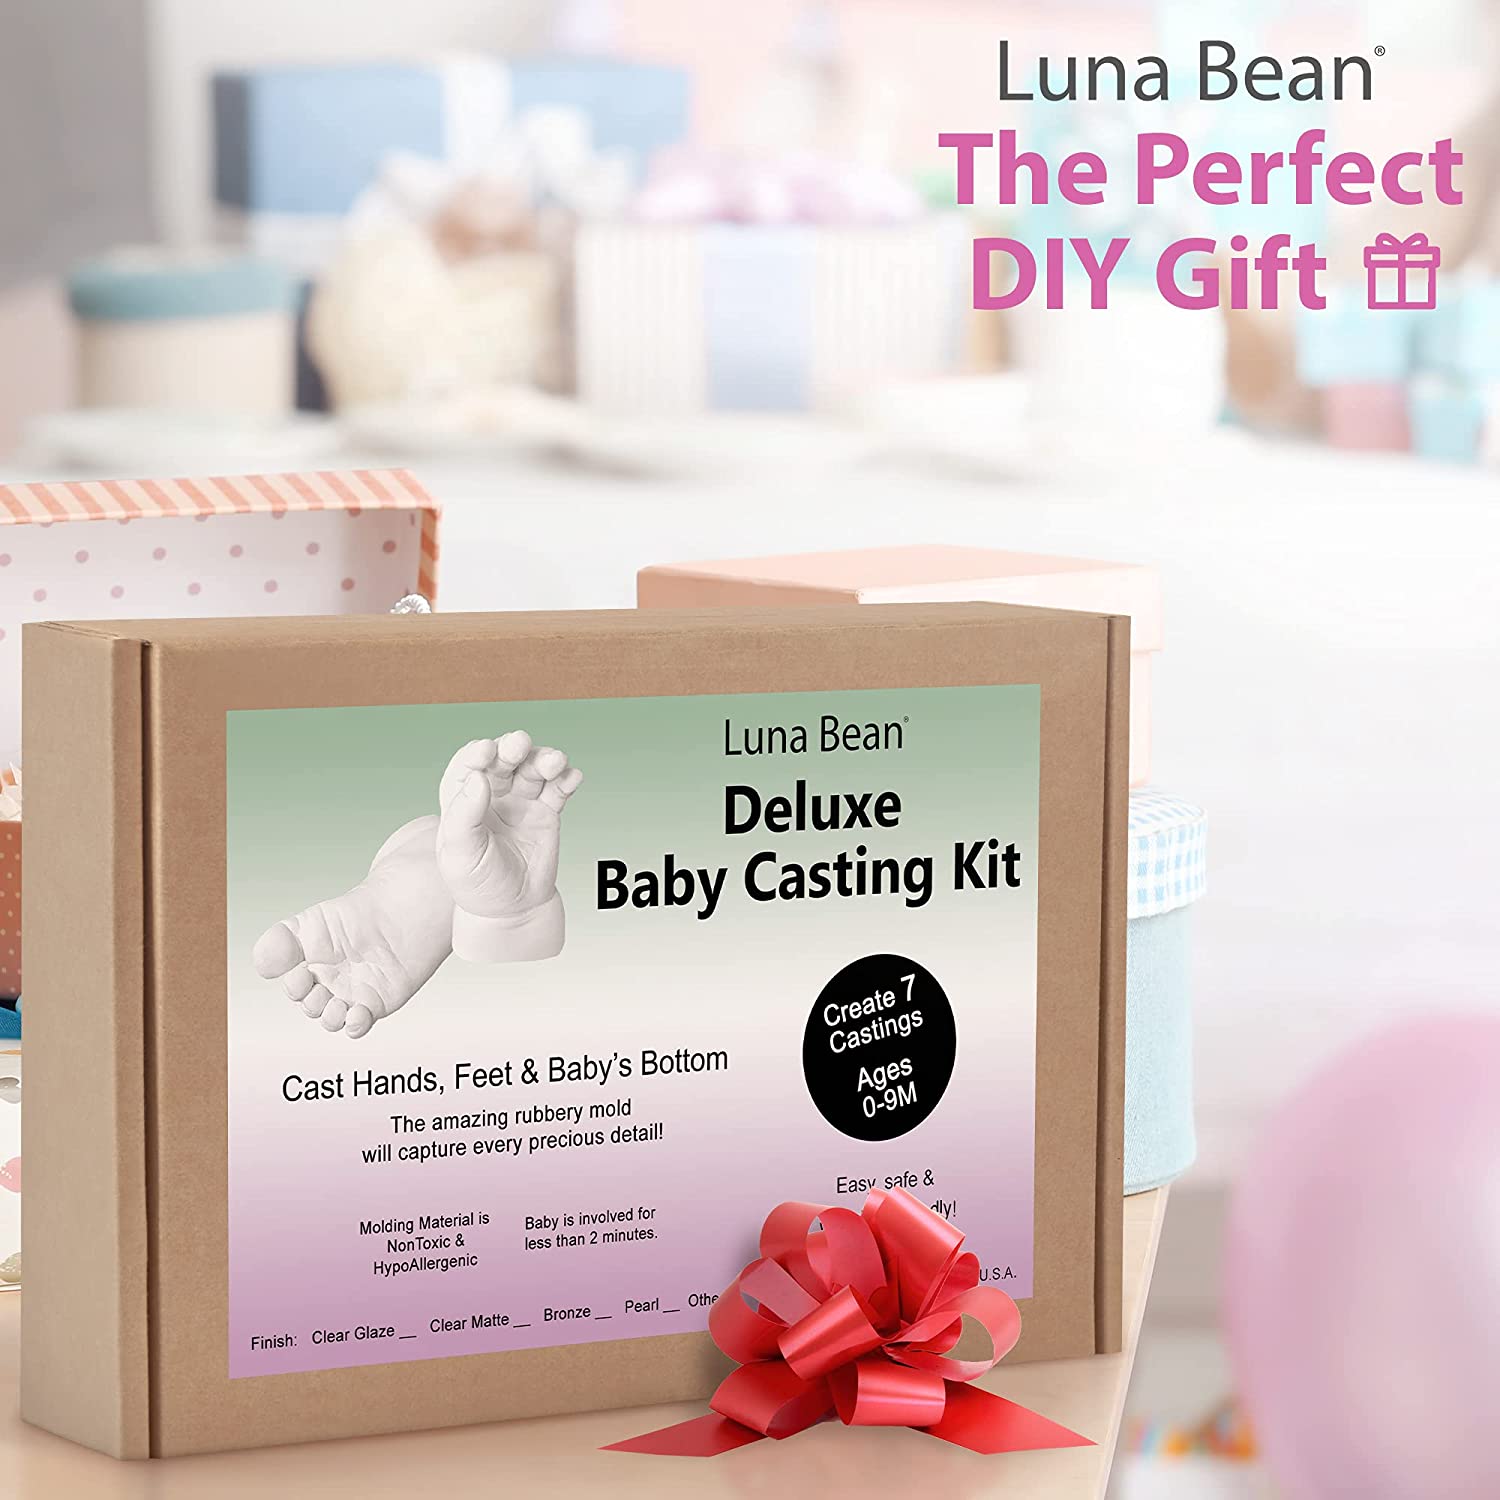 Luna Bean Deluxe Baby Keepsake Hand Casting Kit - Plaster Hand Mold Casting  Kit for Infant Hand & Foot Mold - Baby Casting Kit for First Birthday,  Christmas & Newborn Gifts - (